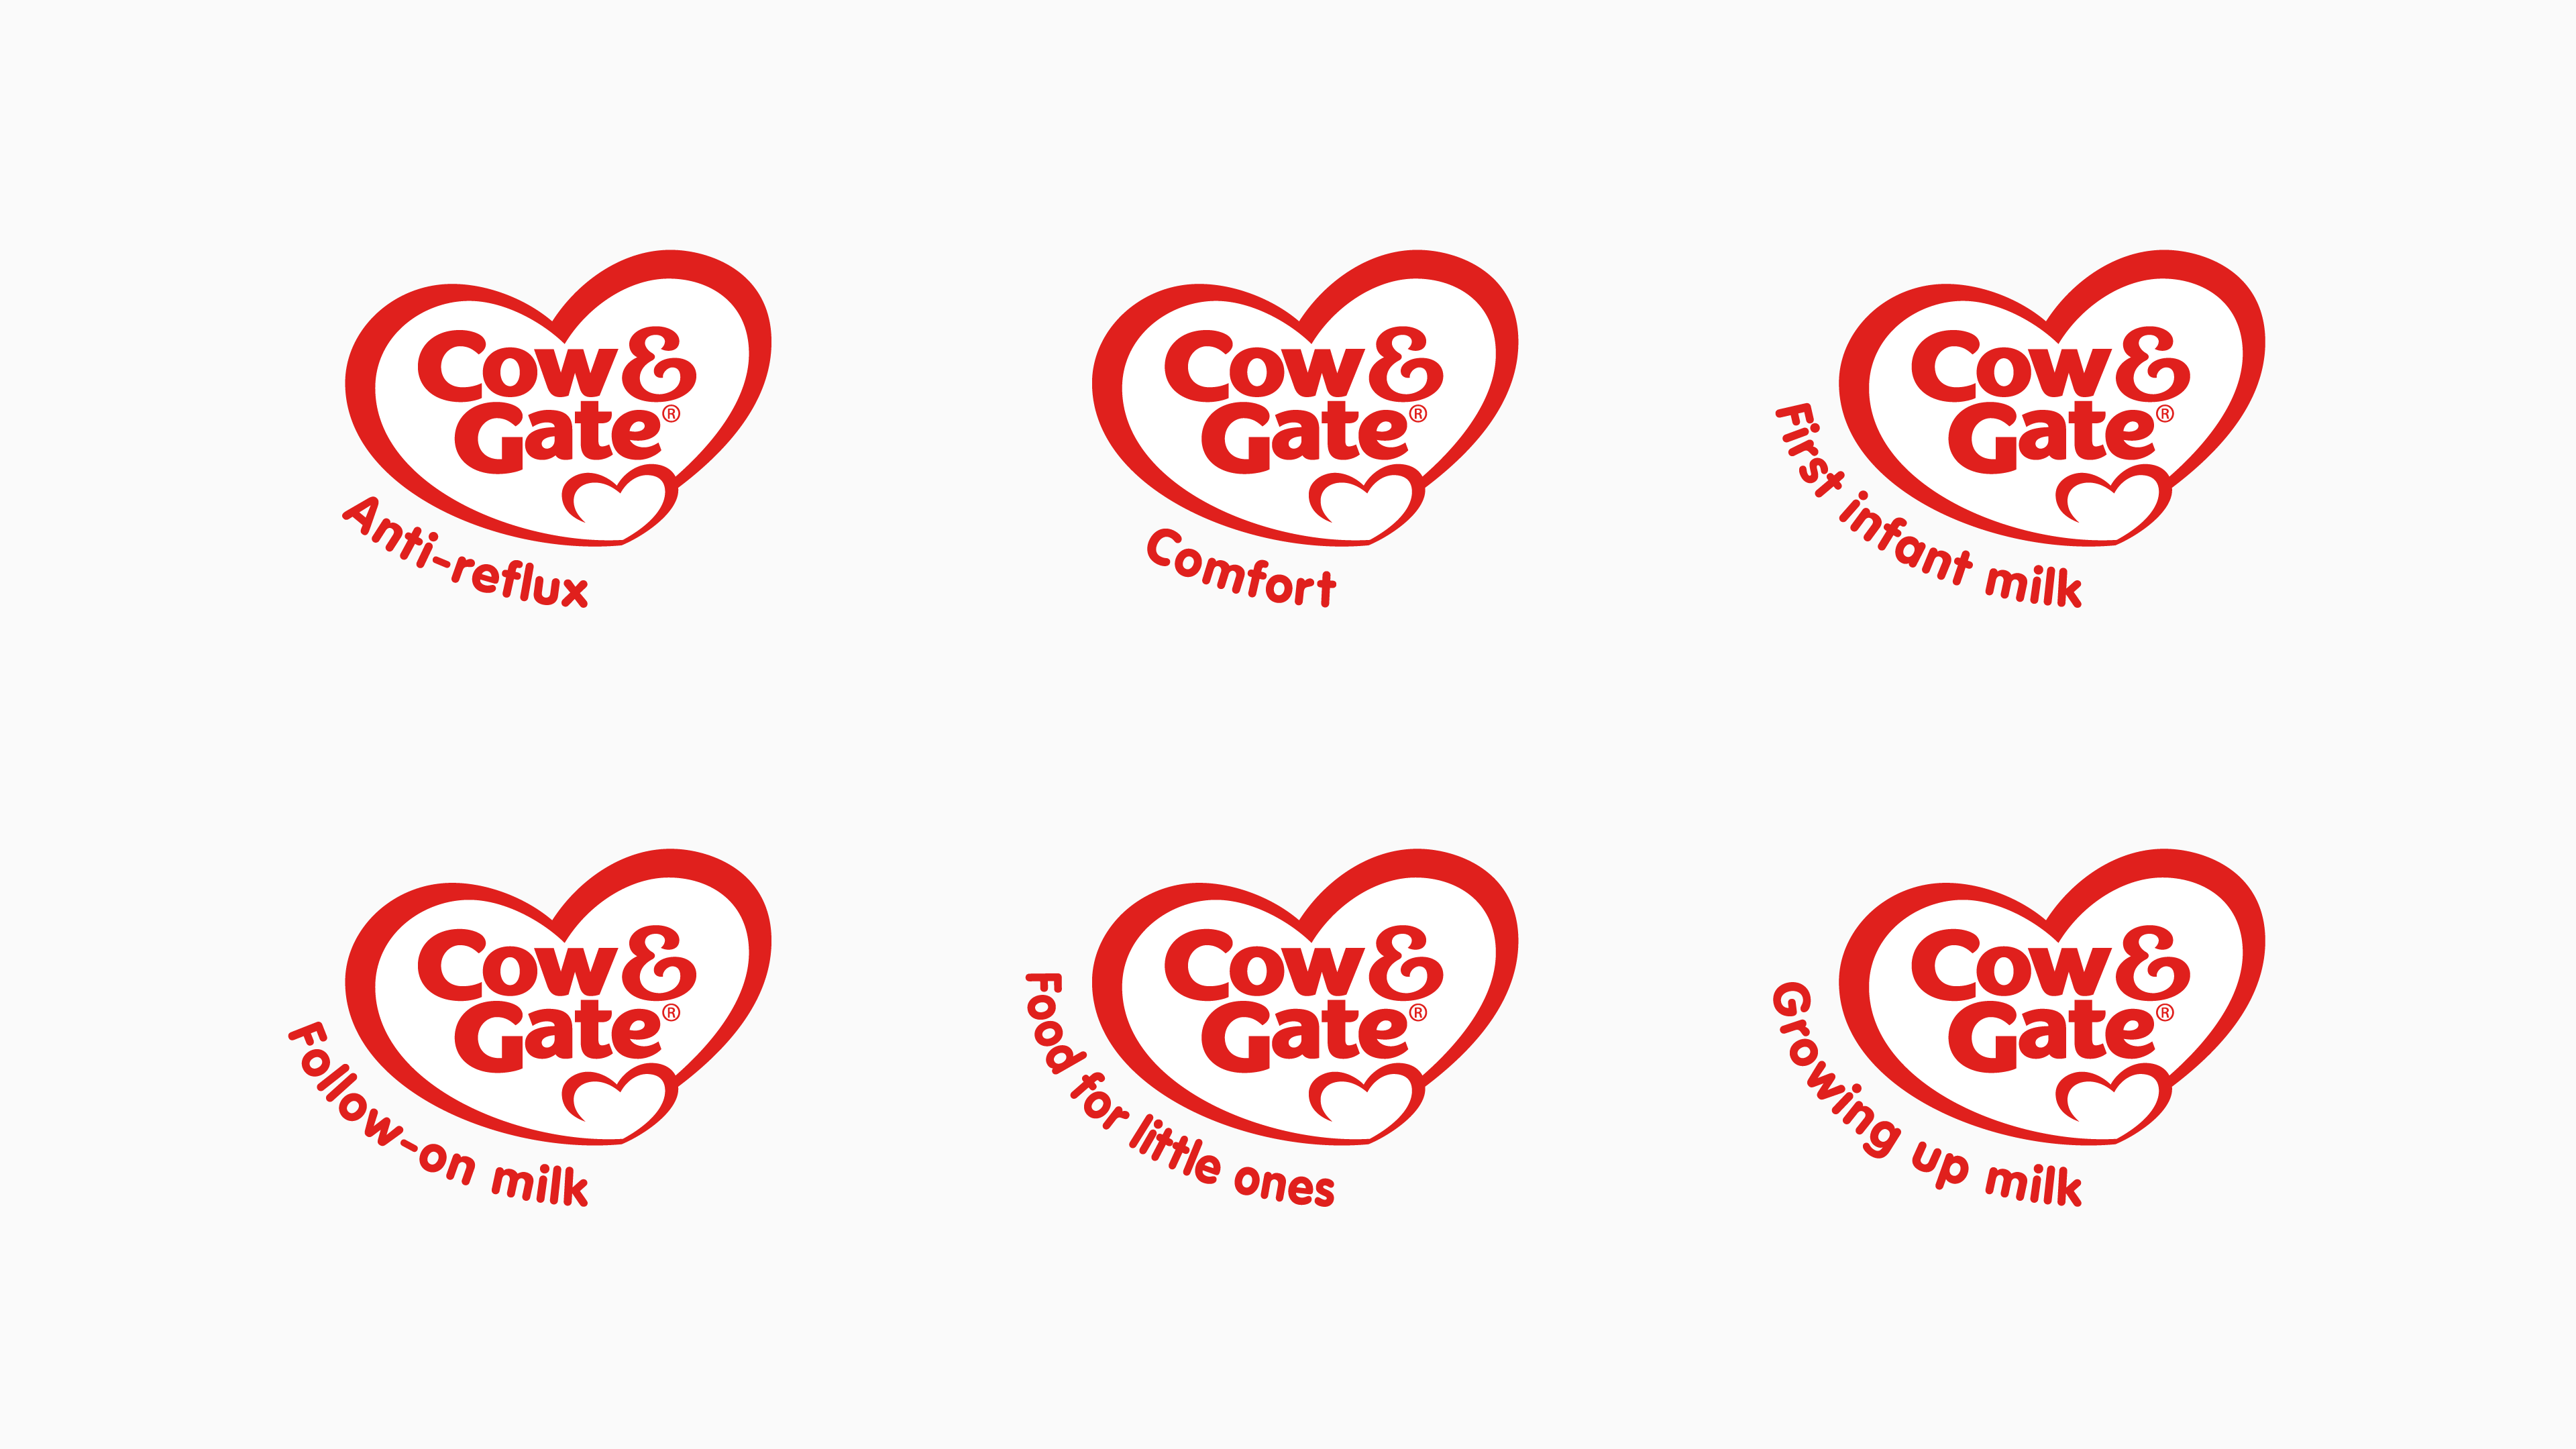 Cow & Gate logos